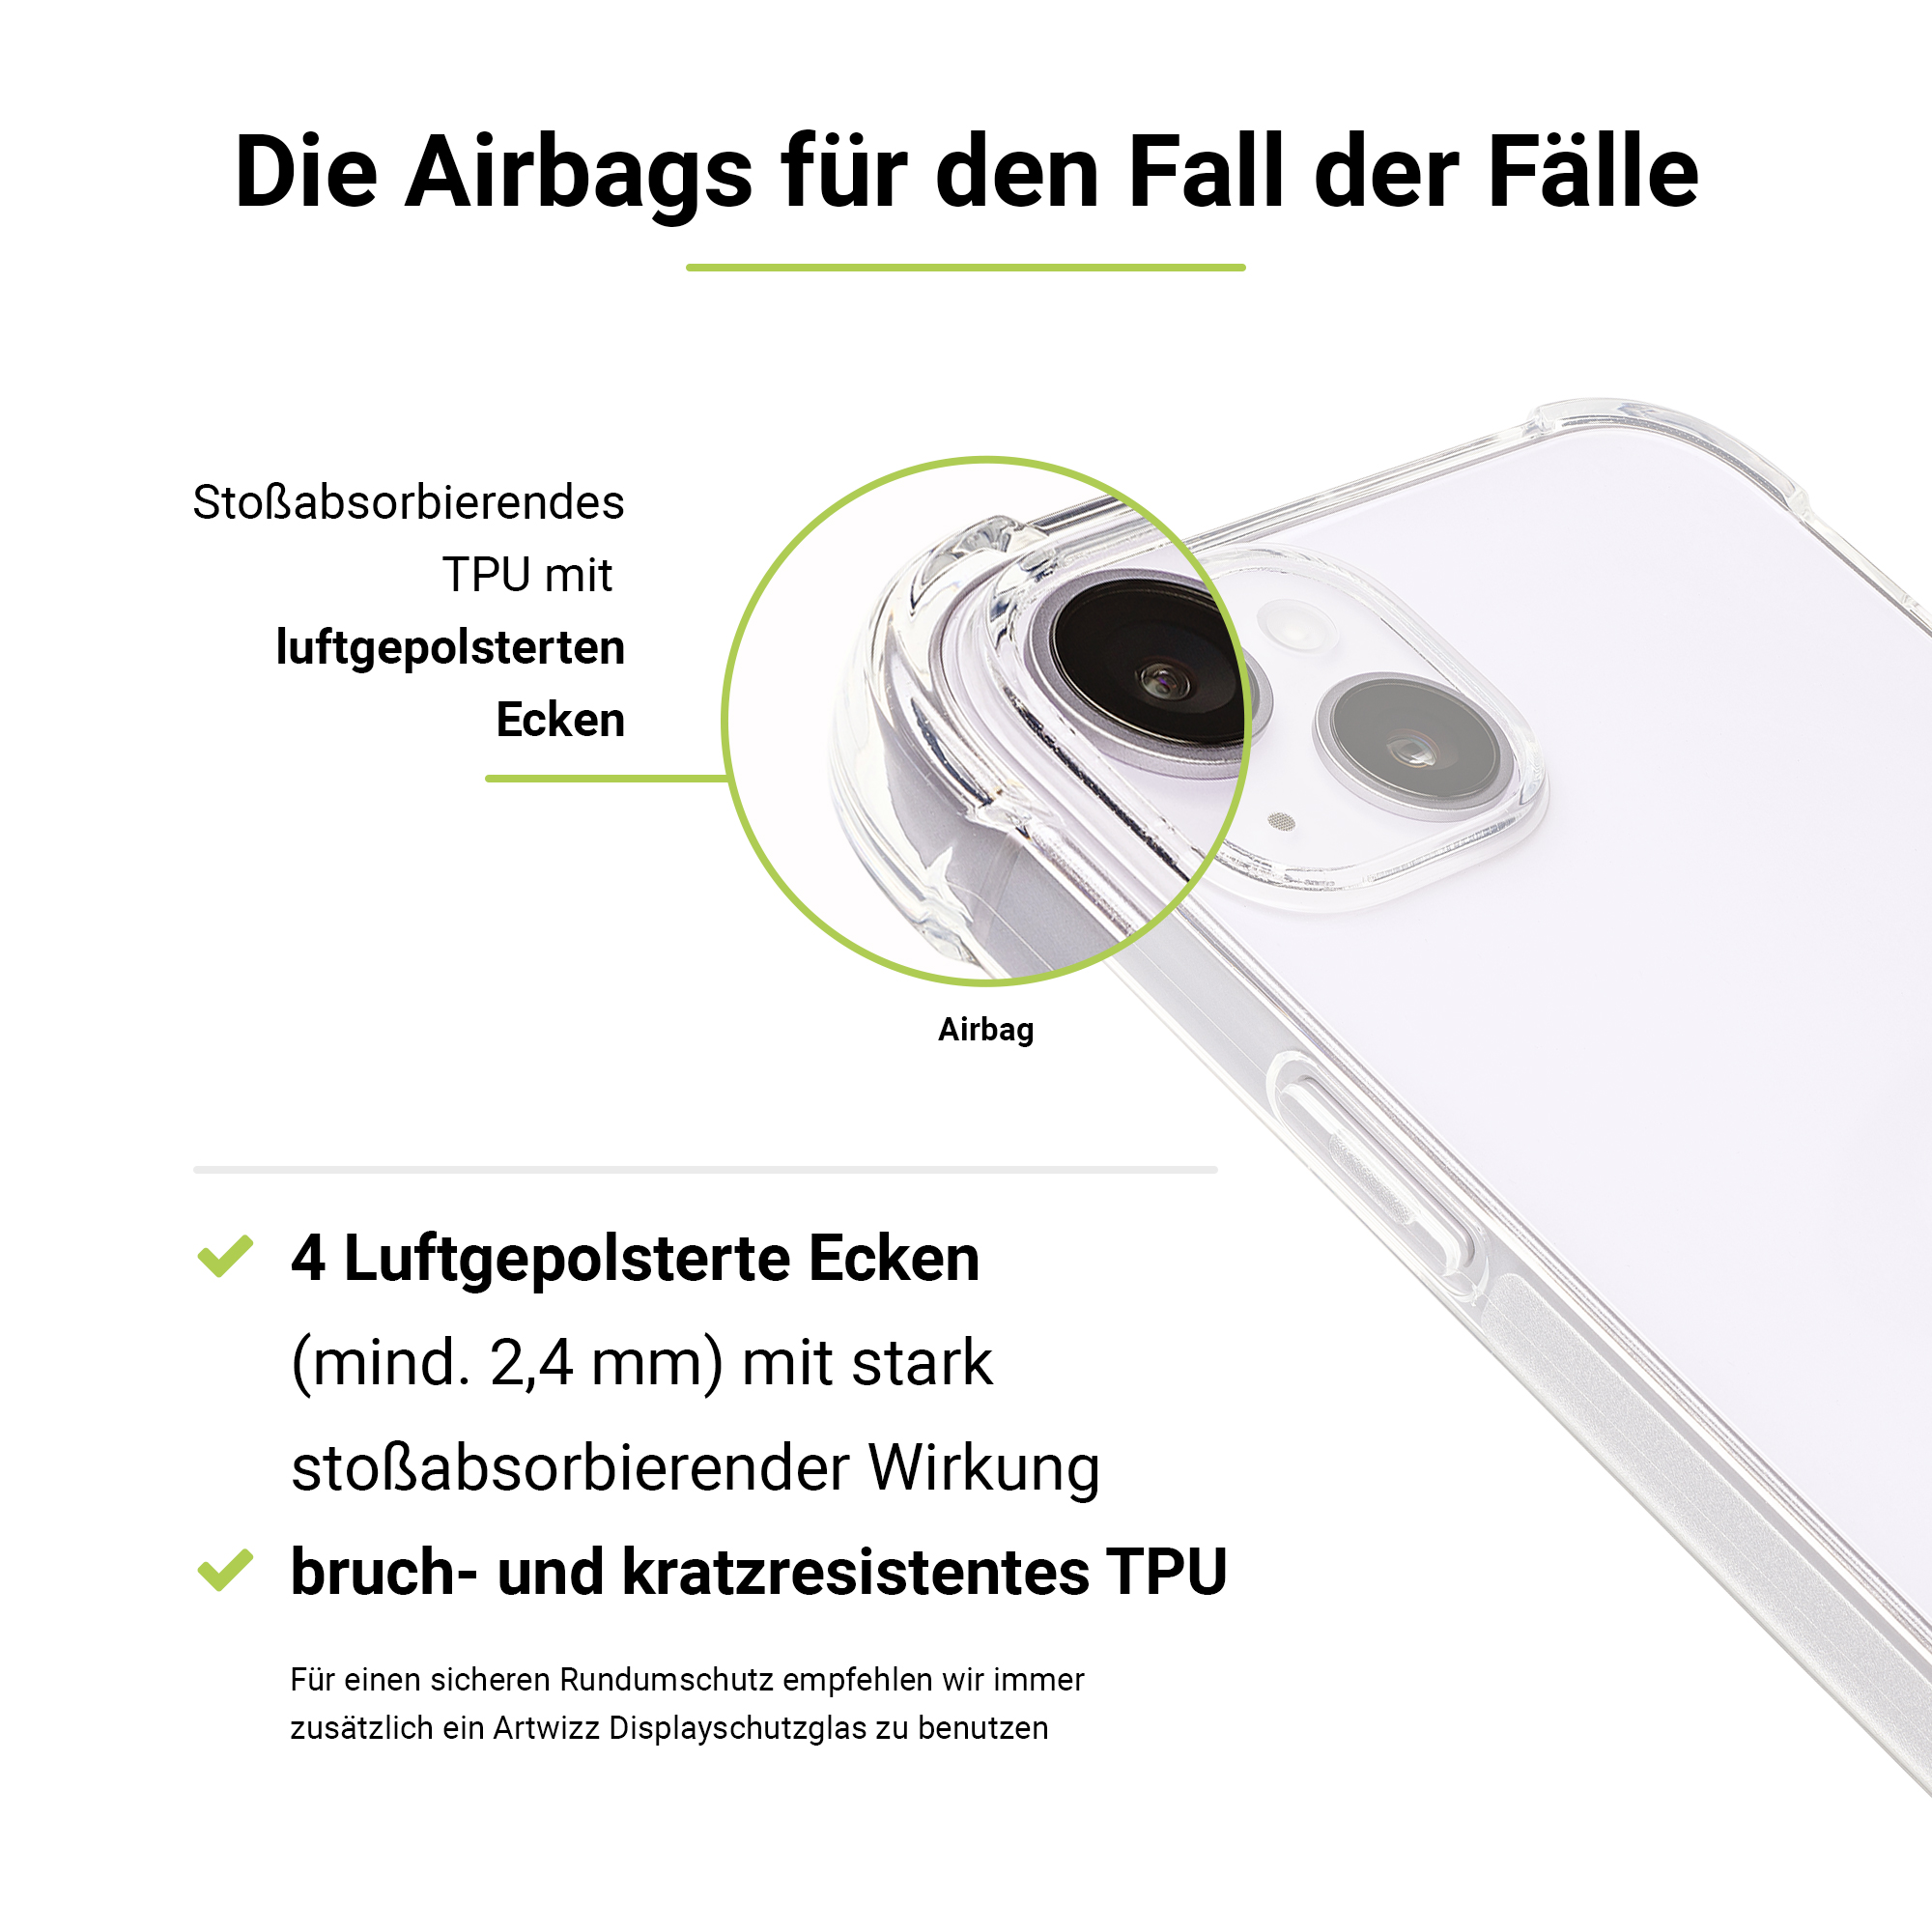 Clear Transparent Plus, Case, 14 Protection iPhone Apple, Backcover, ARTWIZZ